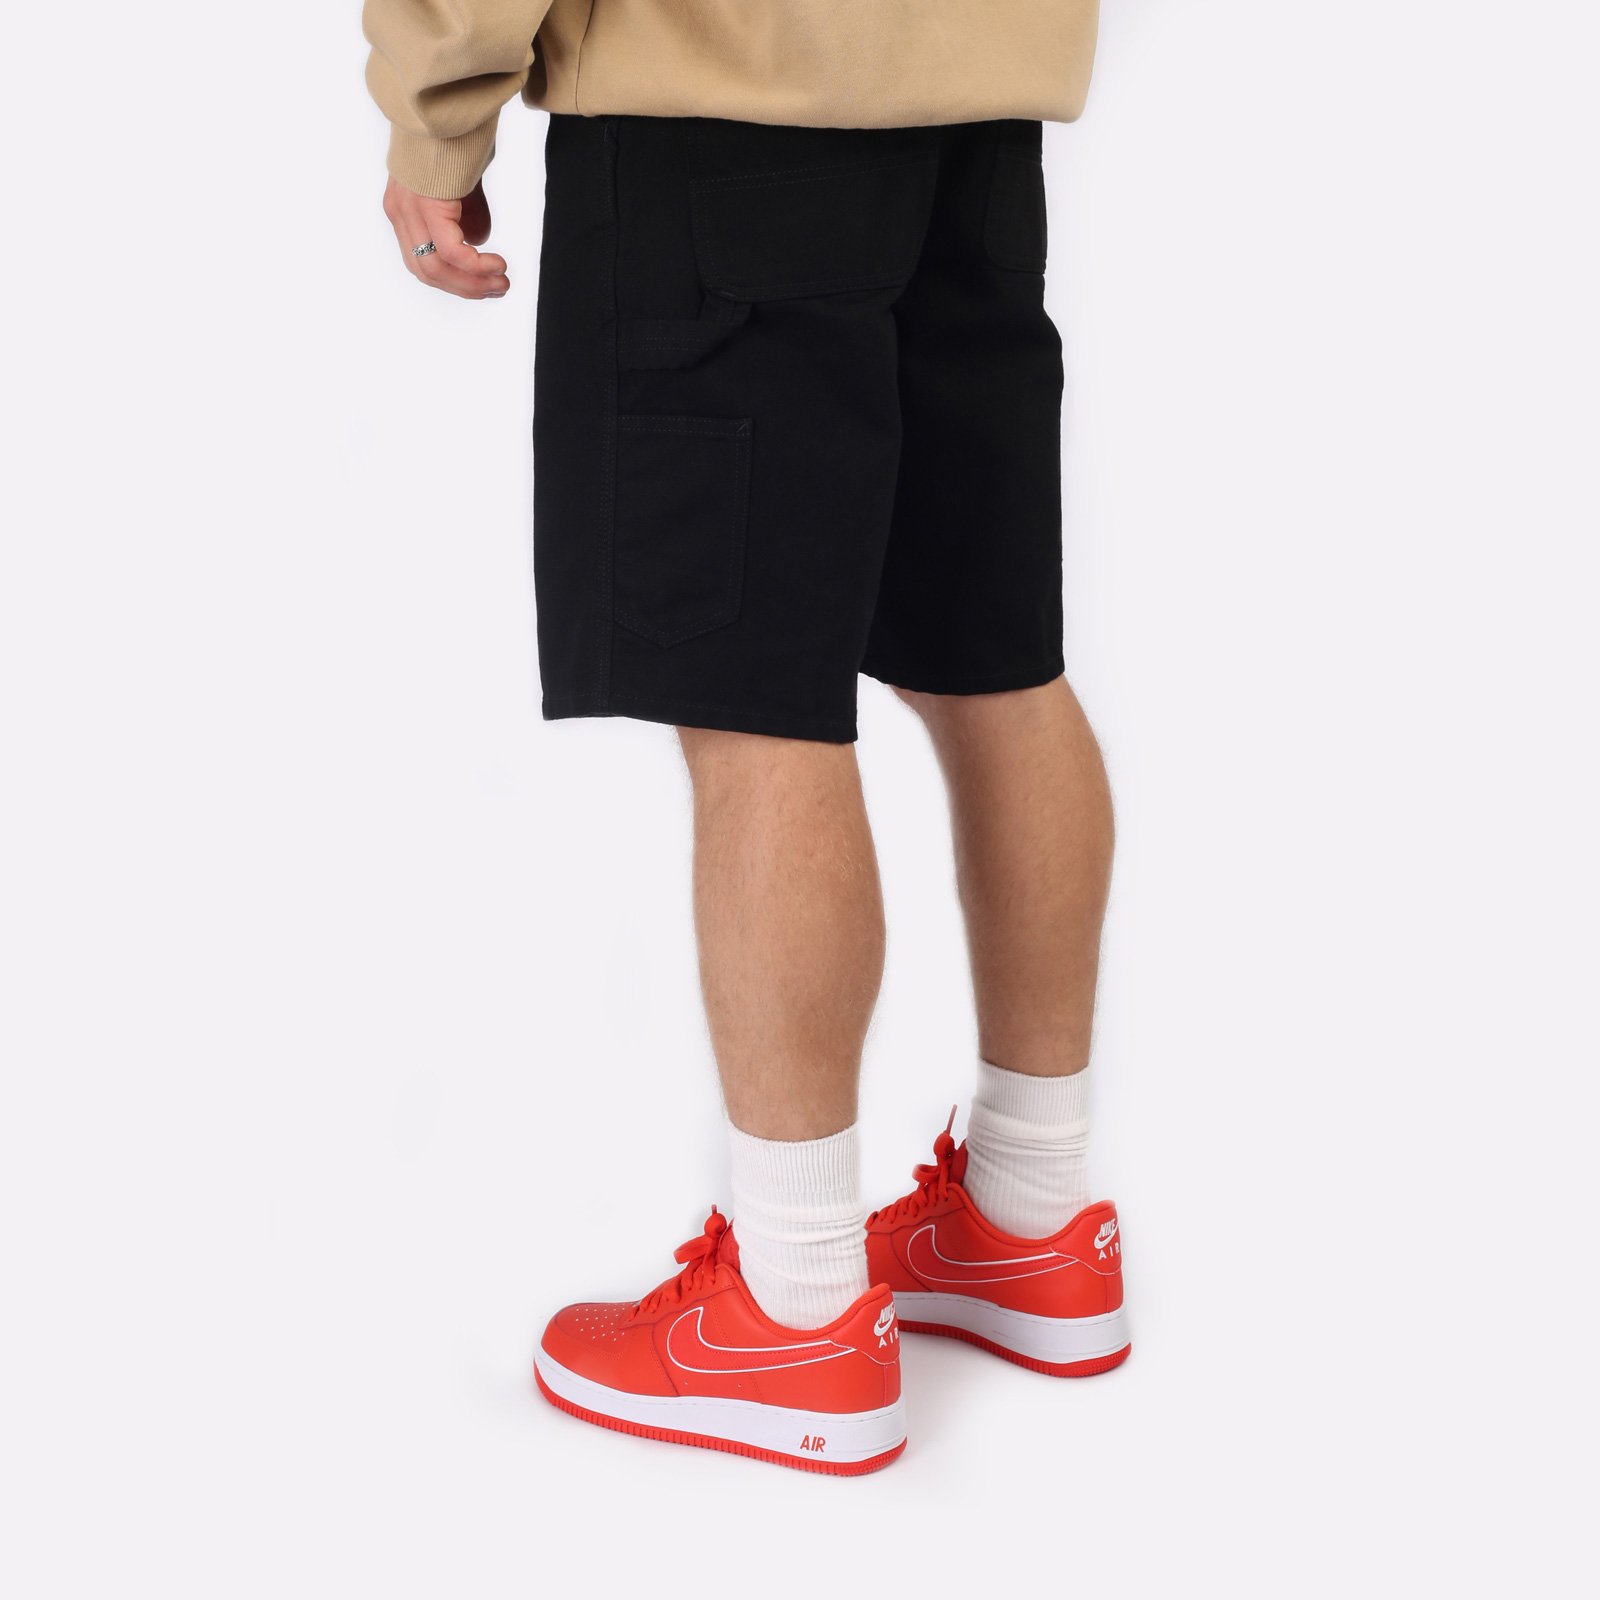 мужские шорты Carhartt WIP Single Knee Short  (I027942-black)  - цена, описание, фото 4